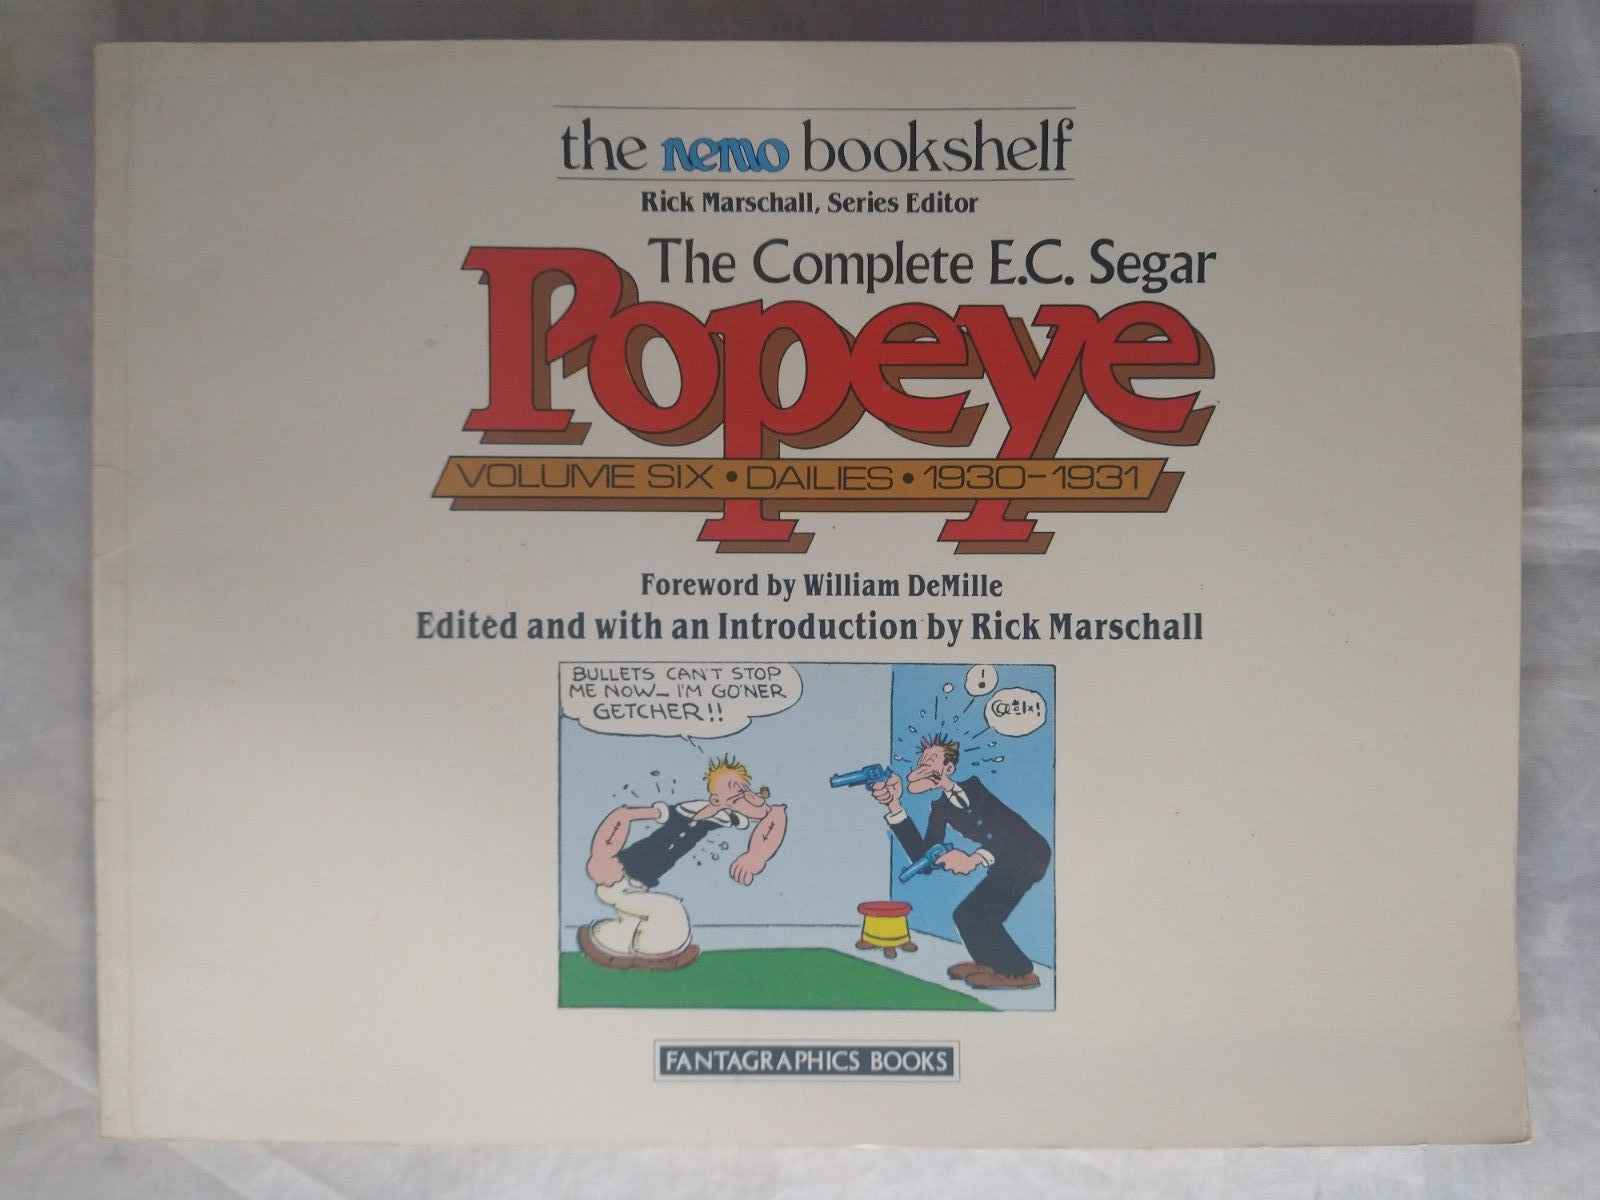 The Complete E.C. Segar Popeye Volume Six: Dailies 1930-1931 Paperback Vintage